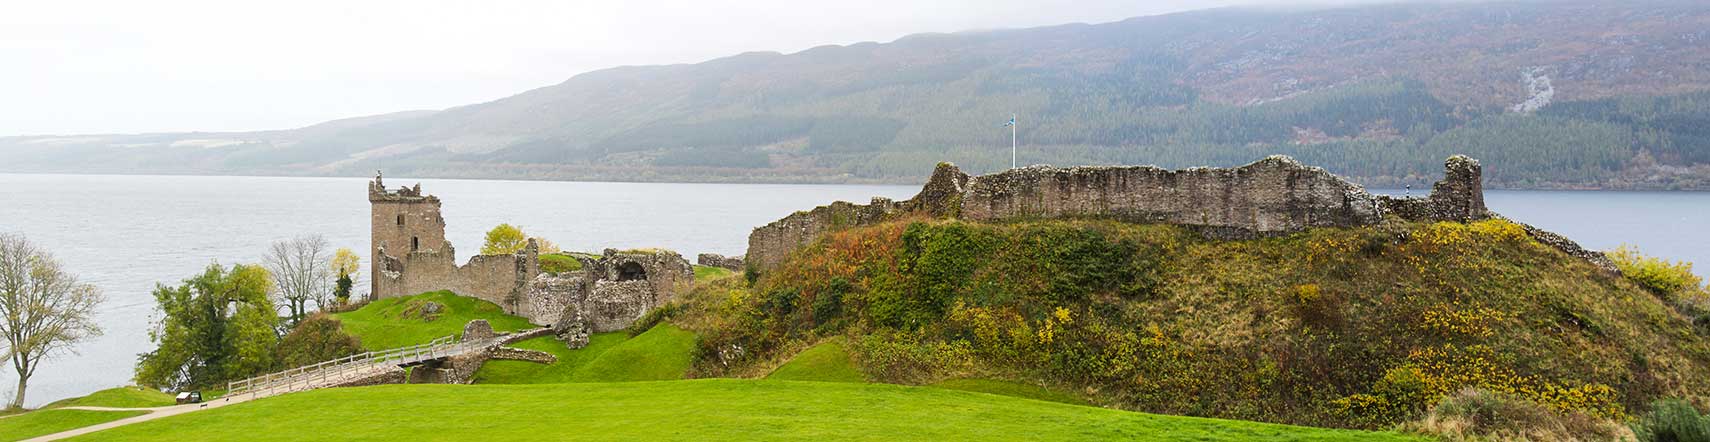 Ruins of Urquhart Castle at Loch Ness, Scotland, UK